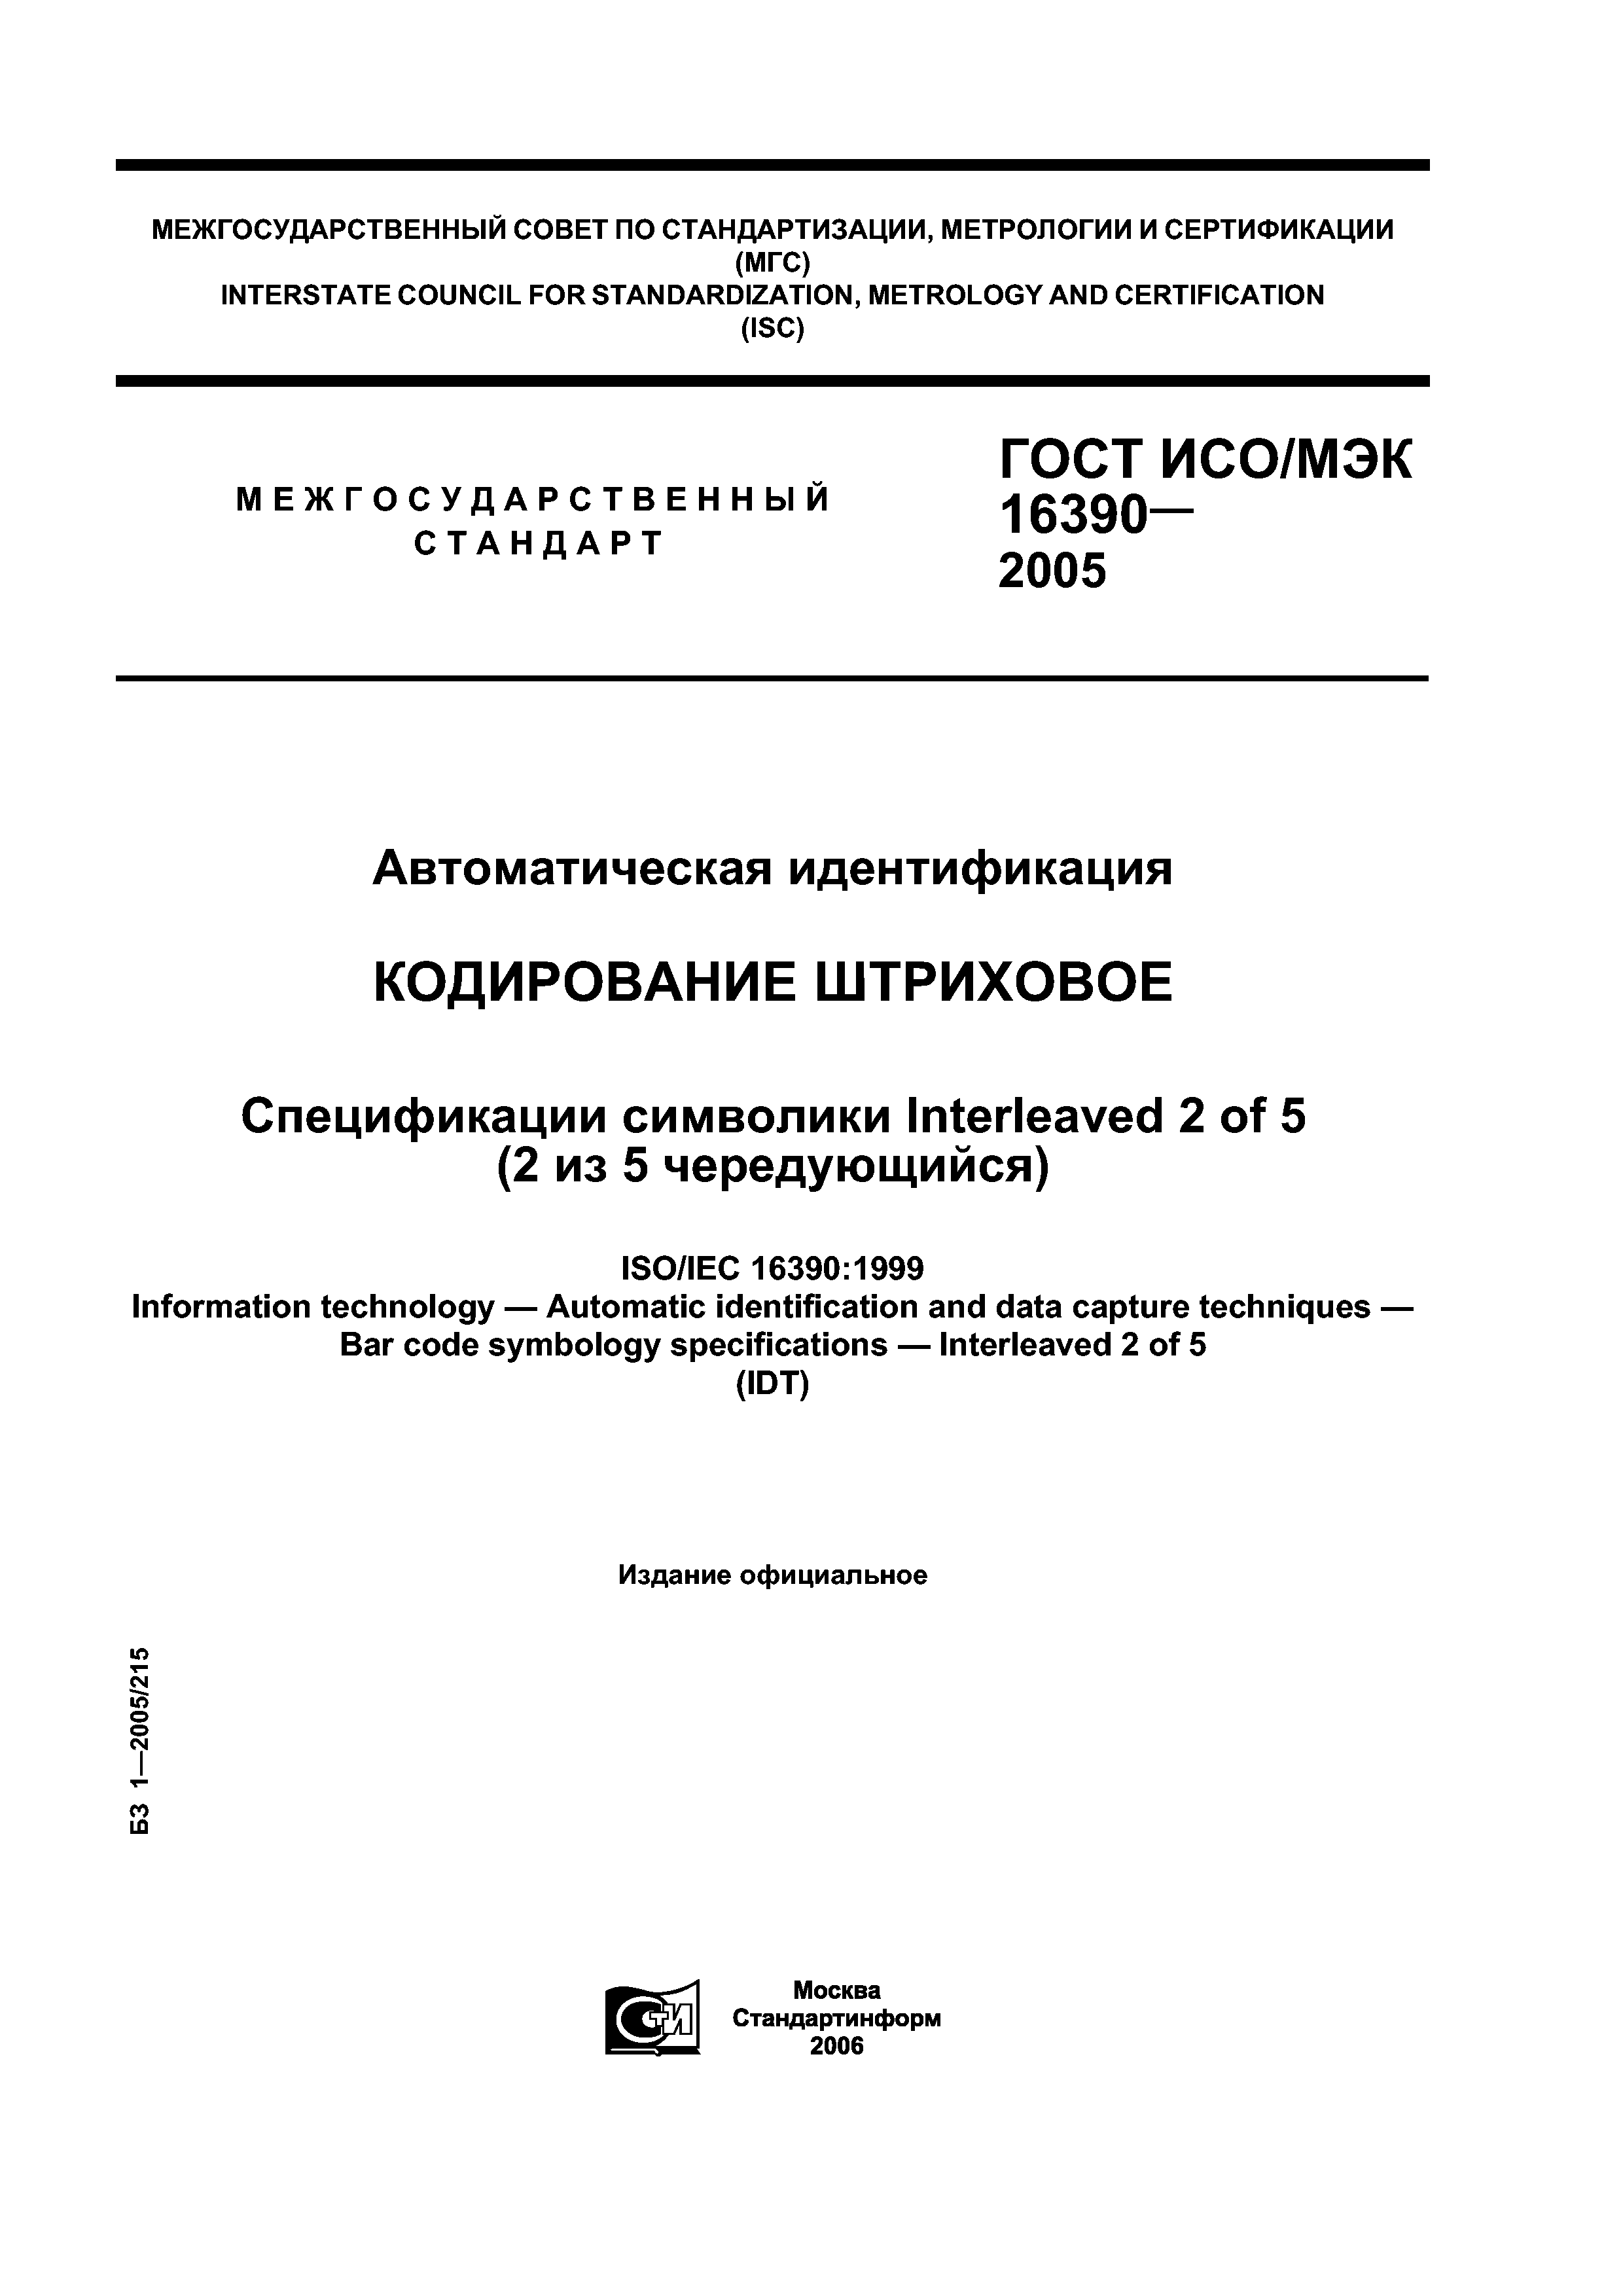 ГОСТ ИСО/МЭК 16390-2005